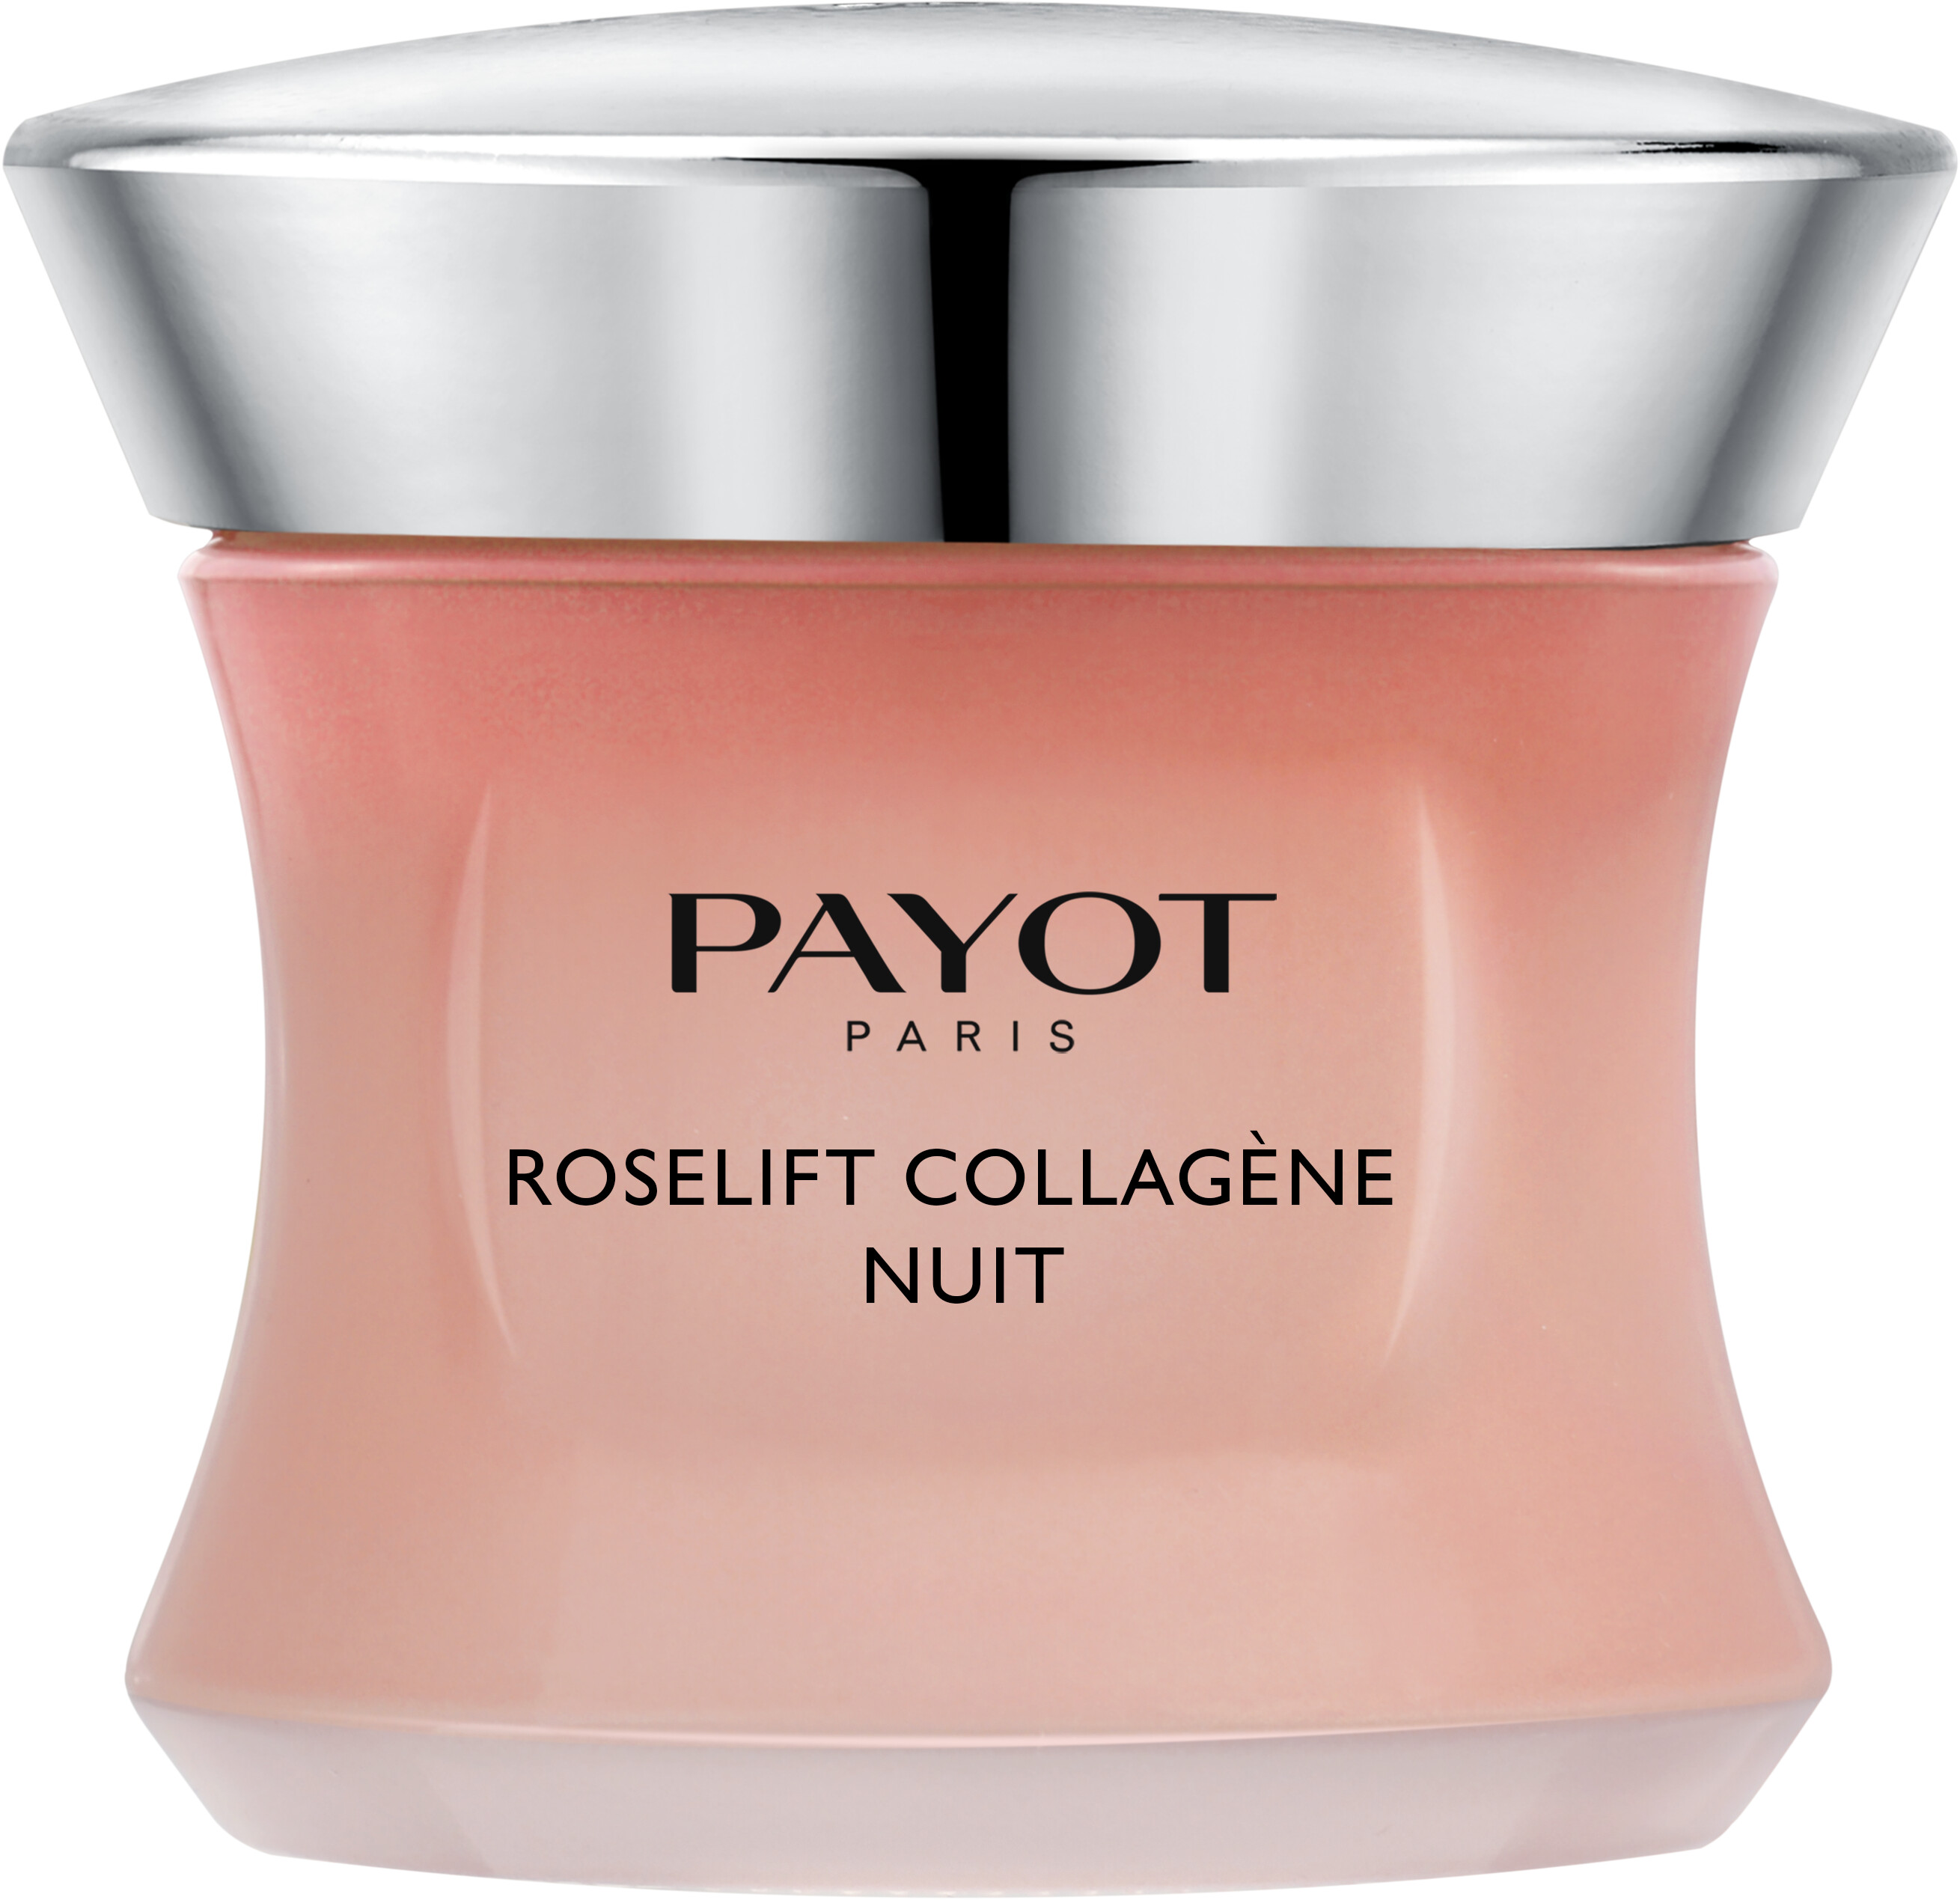 PAYOT Roselift Collagene Nuit - Resculpting Skin Cream 50ml